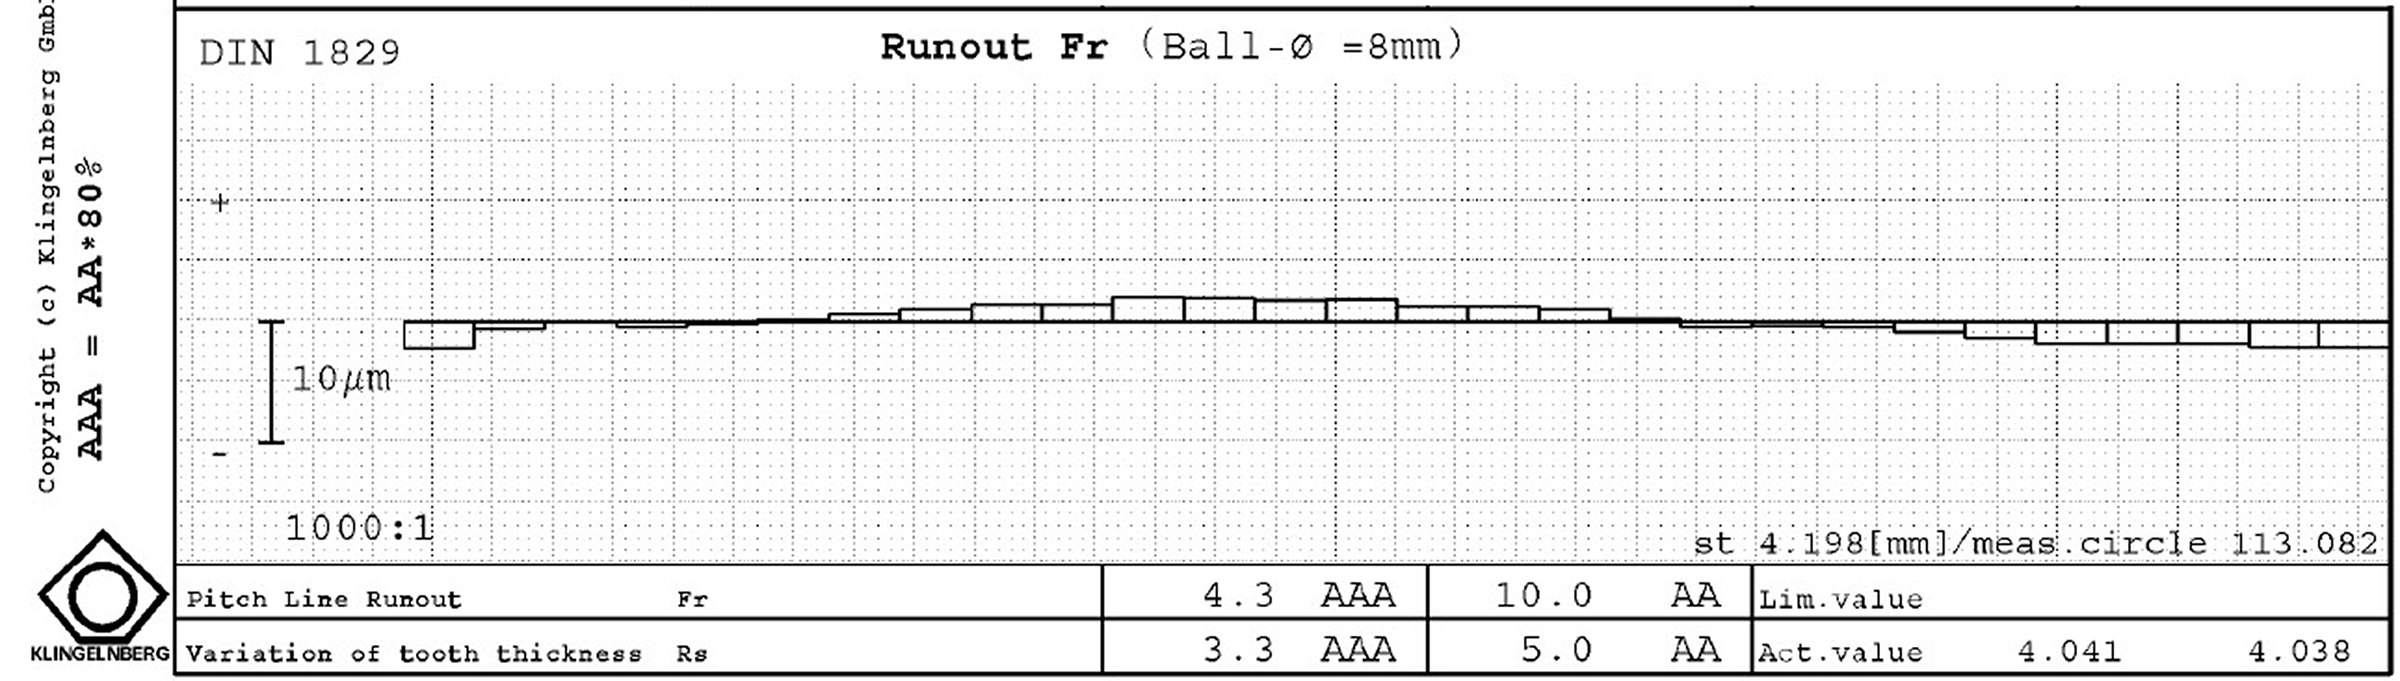 #4 Pitch line runout source grind center